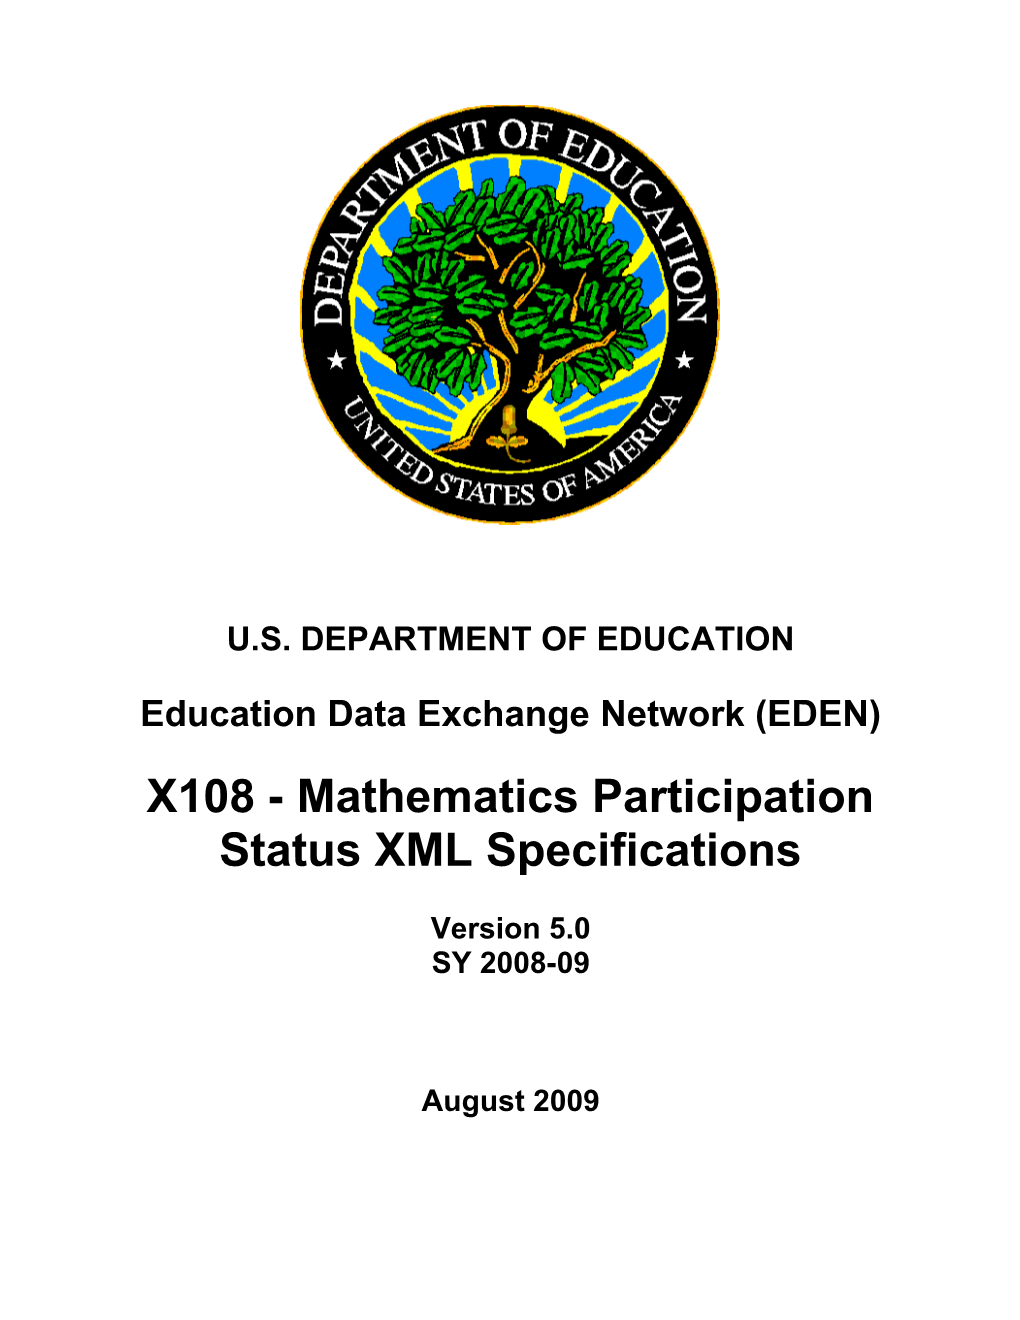 X108 - Mathematics Participation Status XML Specifications (MS Word)